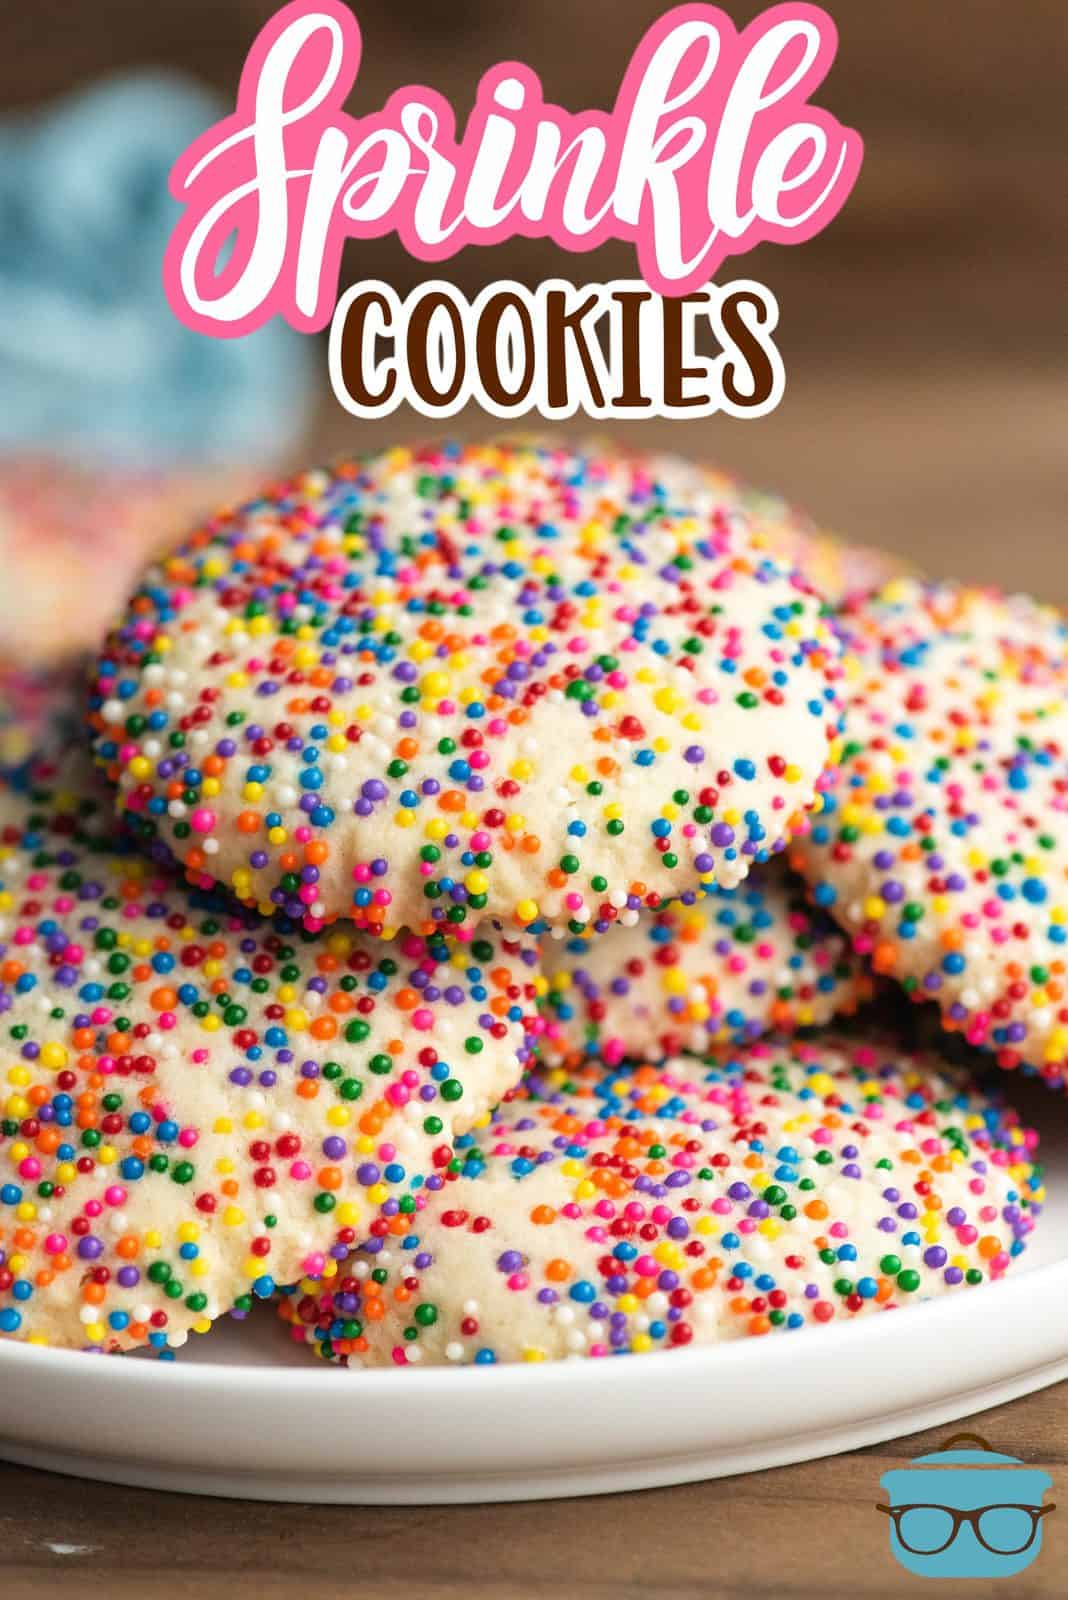 Pinterest image of Sprinkle Cookies on white plate.